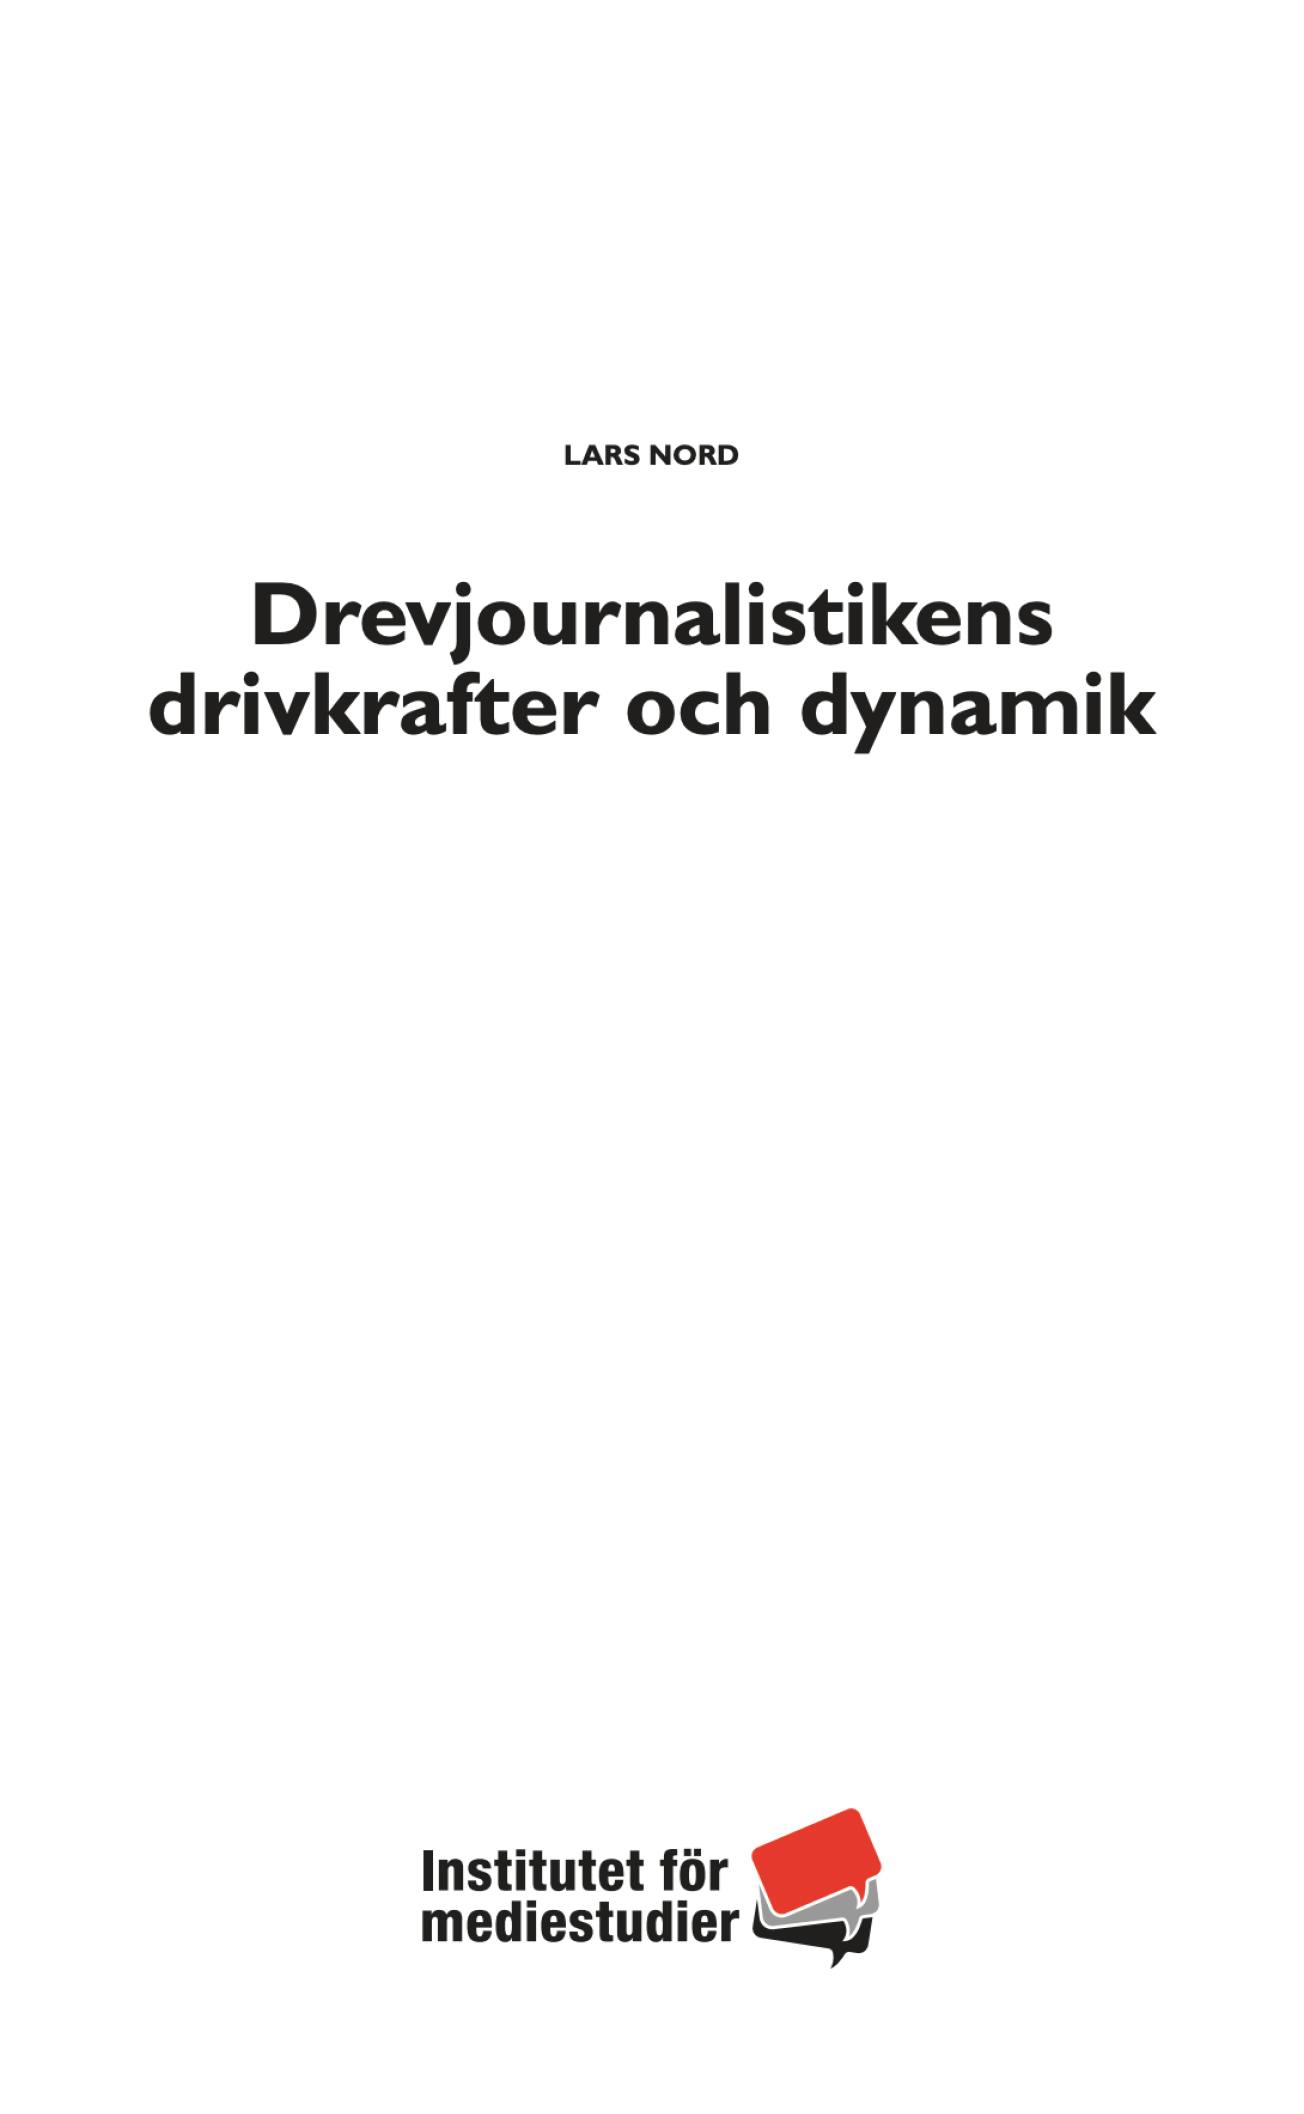 Report: Drevjournalistikens drivkrafter och dynamik cover image